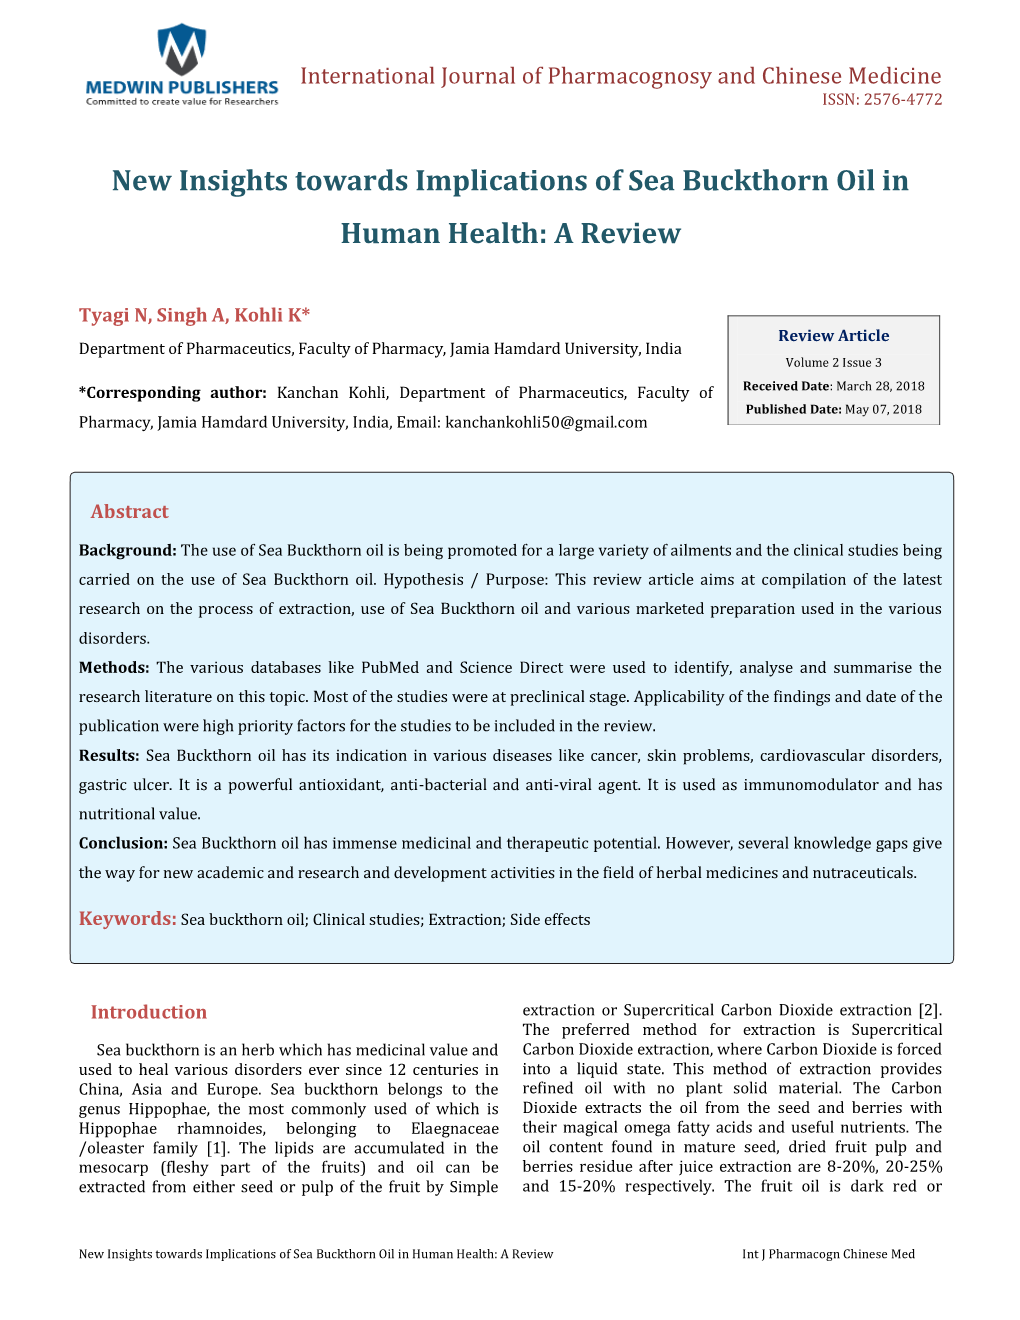 New Insights Towards Implications of Sea Buckthorn Oil Inâ Human Health